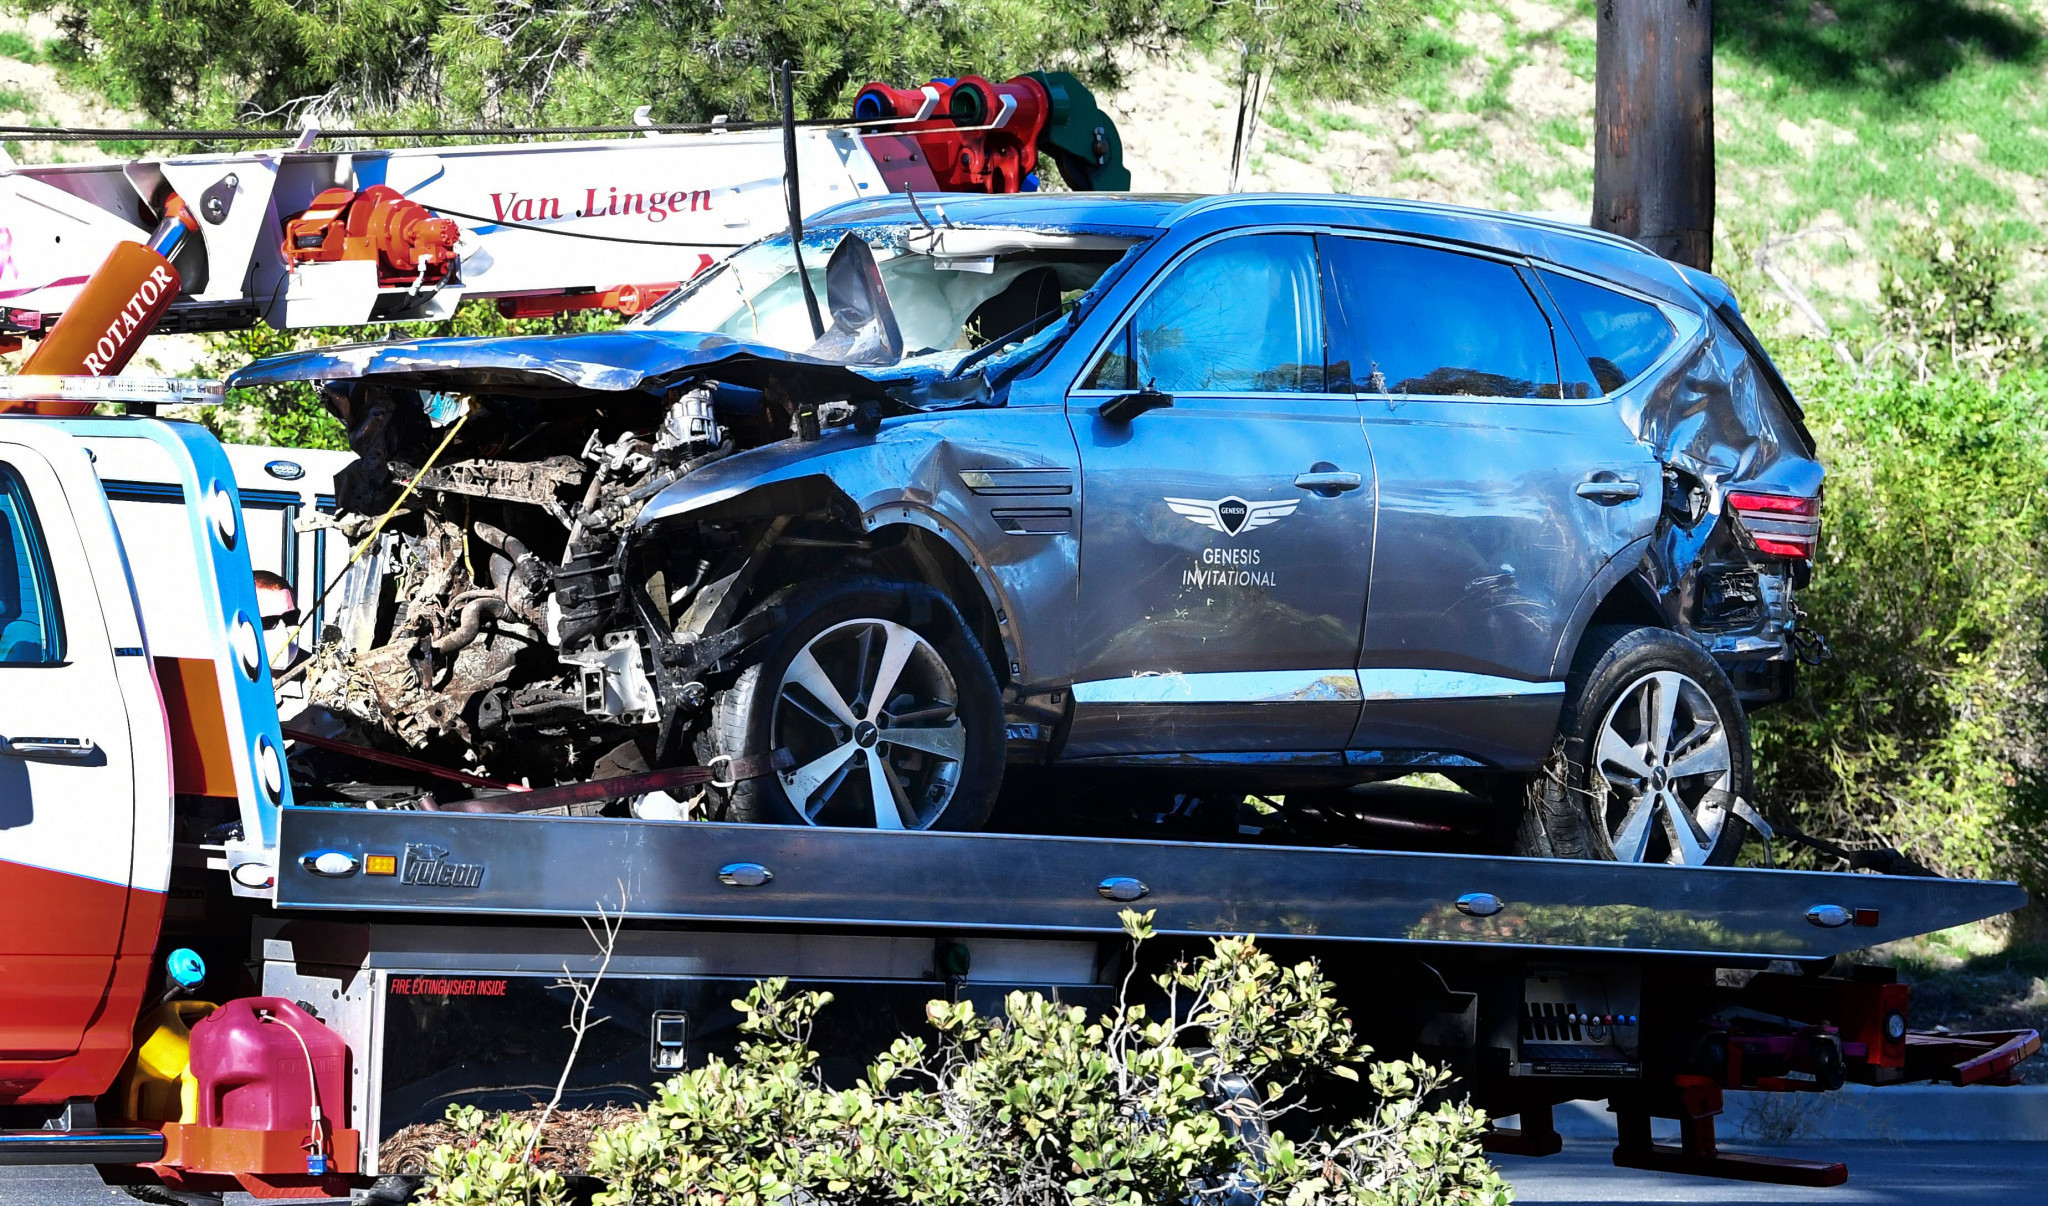 Tiger Woods' car showed significant damage after the crash ©Getty Images